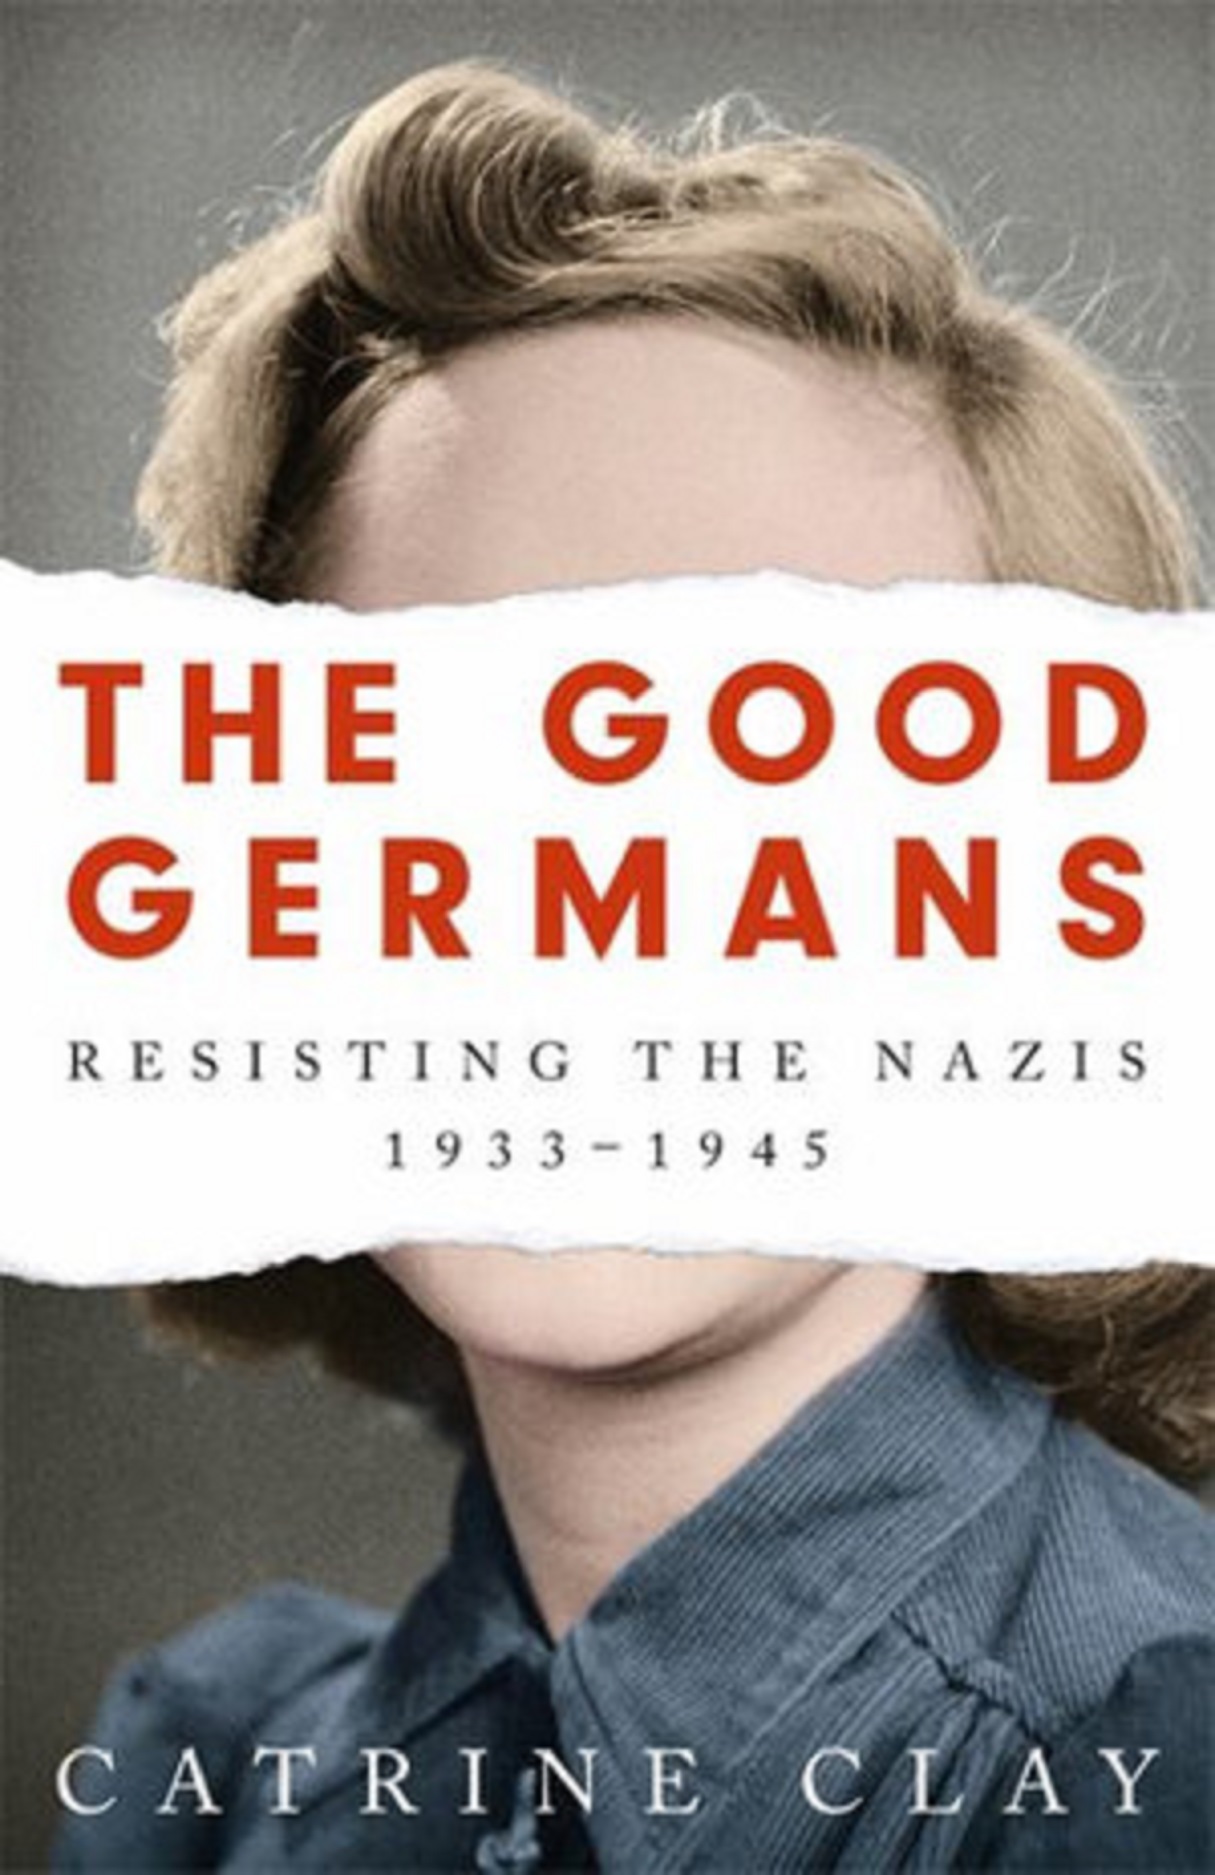 The Good Germans